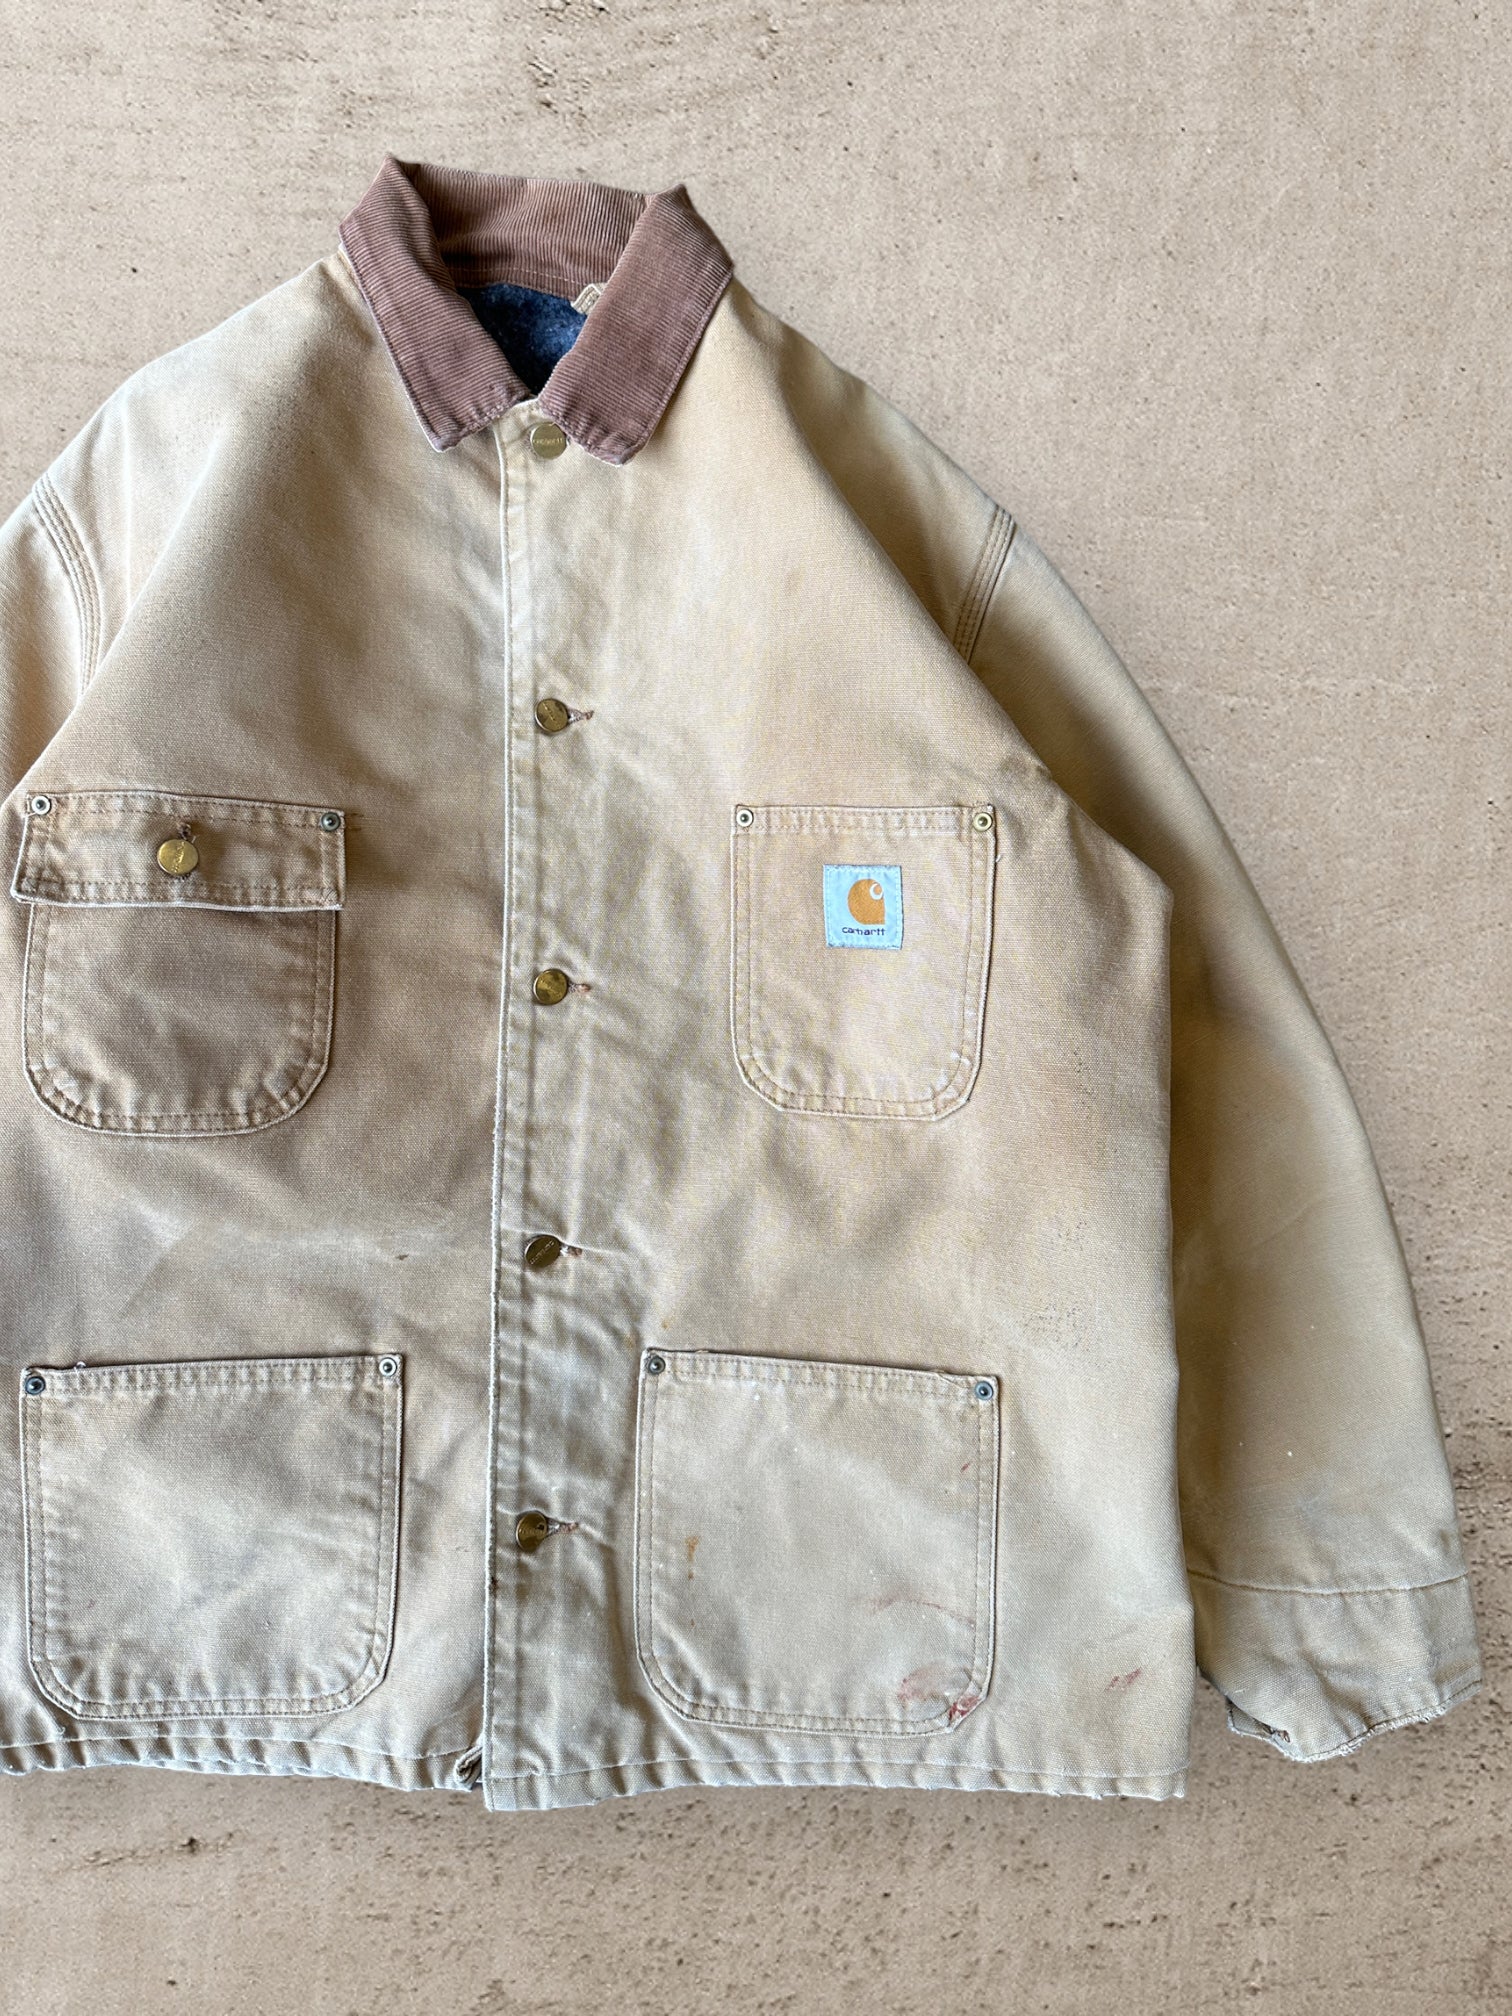 90s Carhartt Blanket Lined Chore Jacket - XL